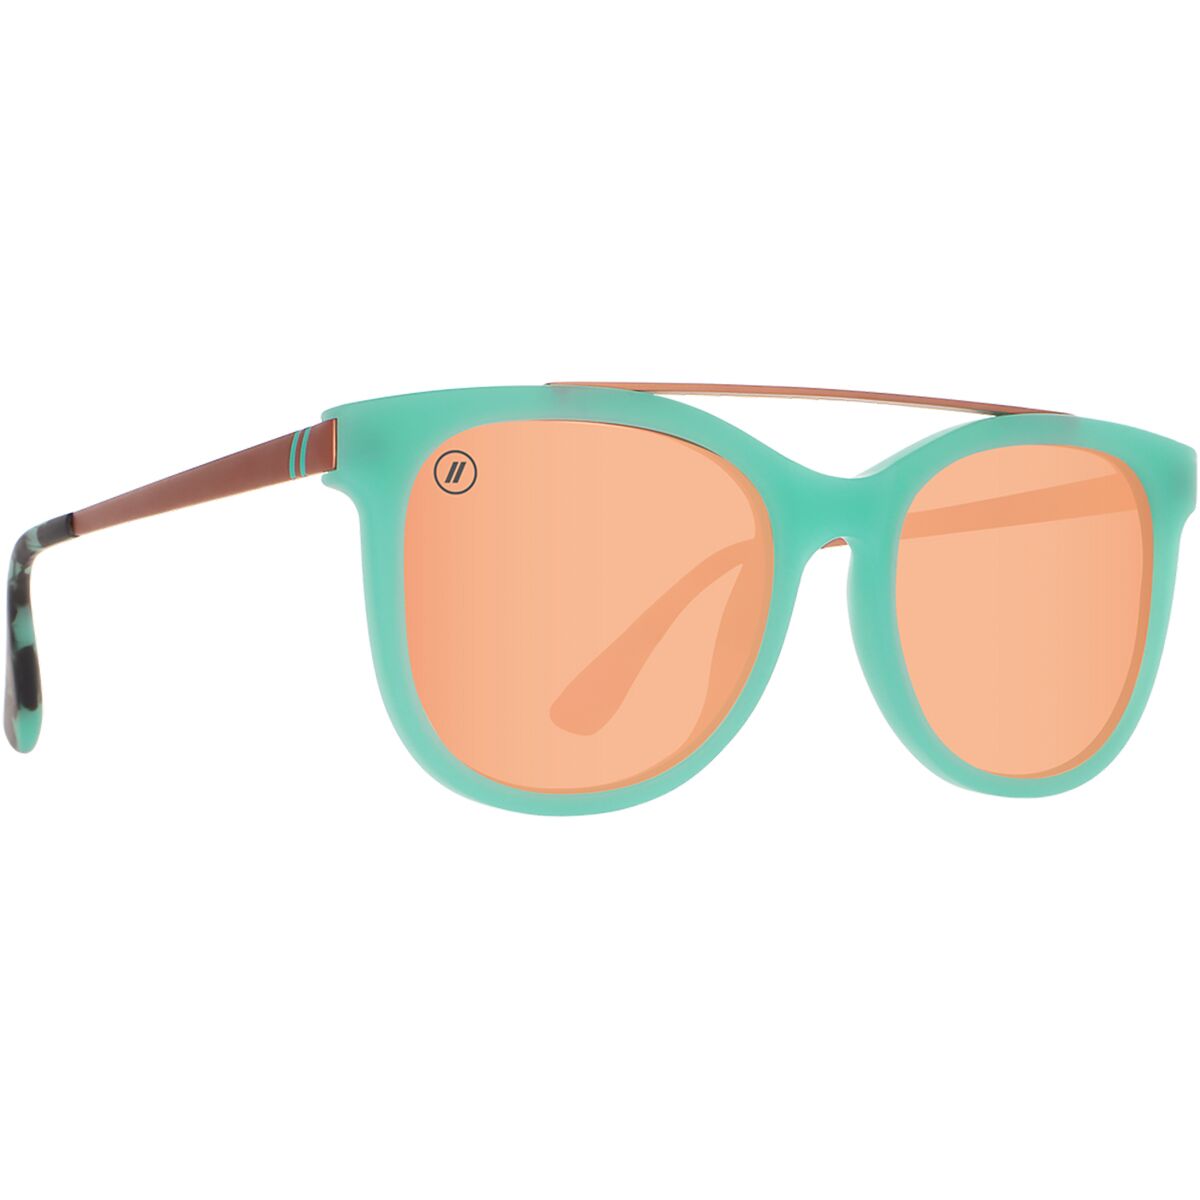 Blenders Eyewear Maui Jade Balboa Polarized Sunglasses